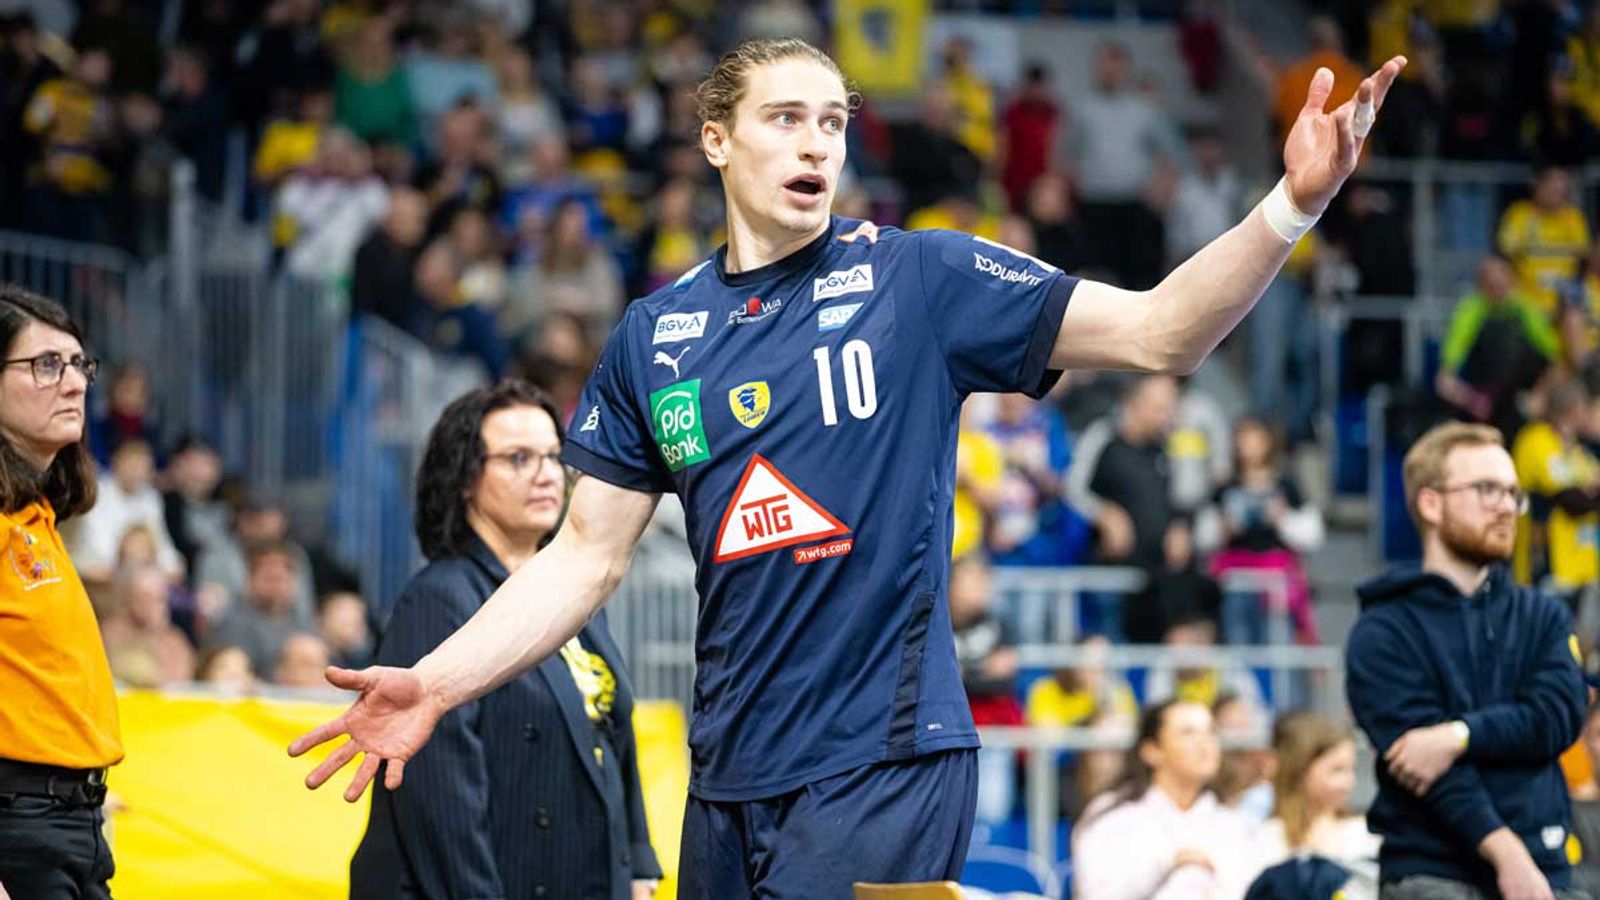 Handball Juri Knorr sieht den Hype um seine Person nicht nur positiv Handball News Sky Sport